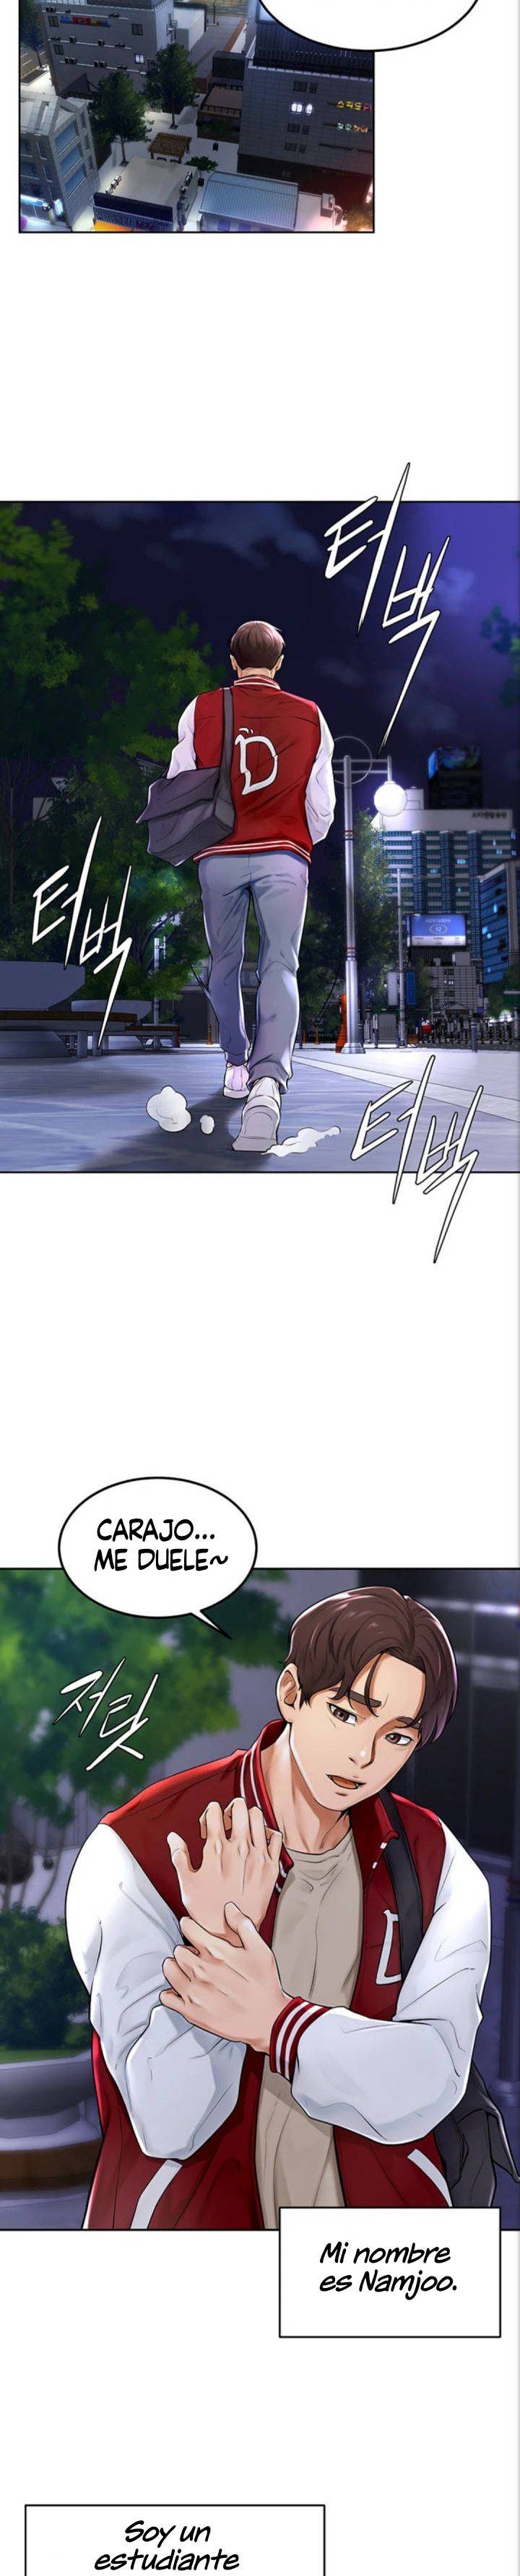 Cheer Up, Namjoo Raw - Chapter 1 Page 3